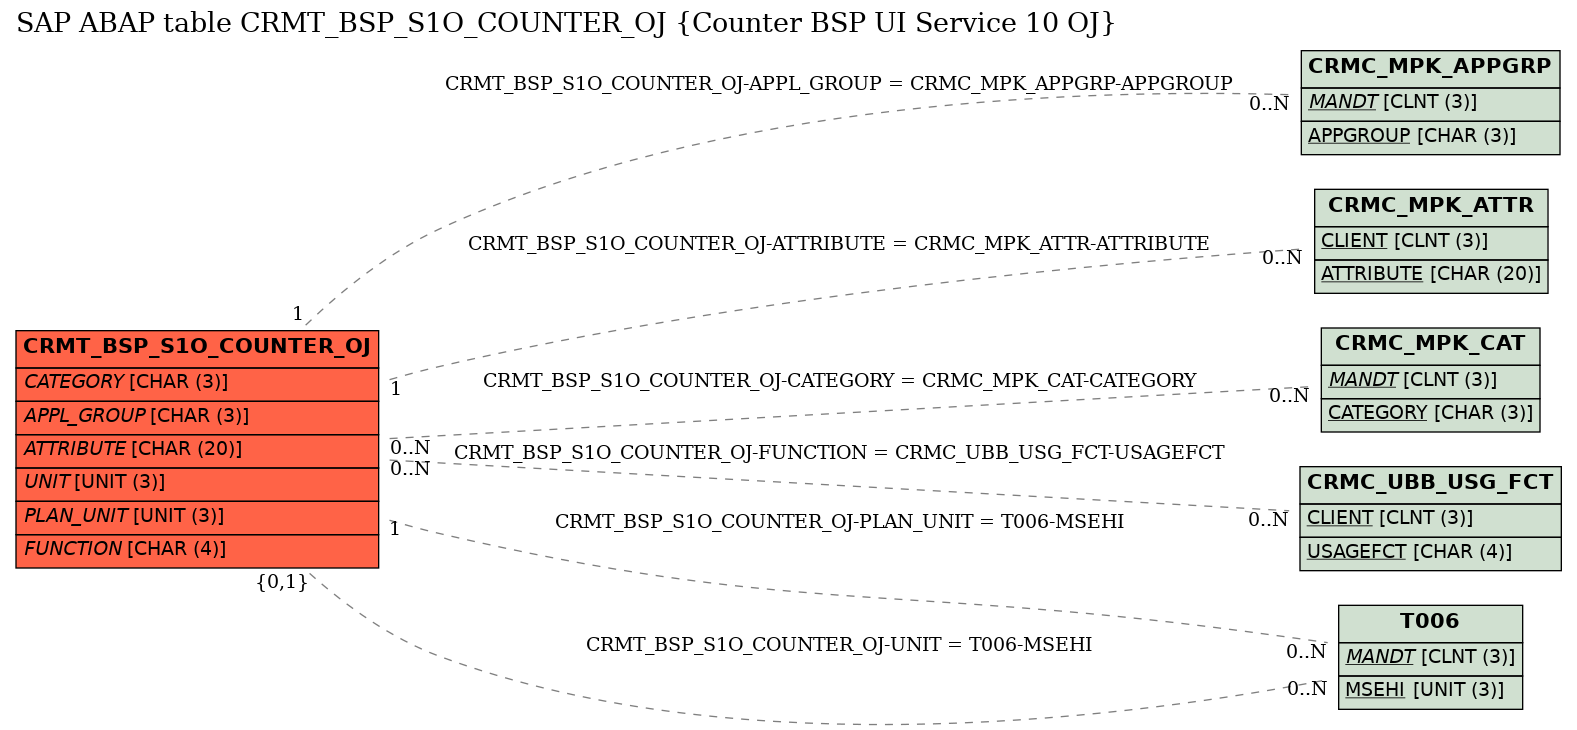 E-R Diagram for table CRMT_BSP_S1O_COUNTER_OJ (Counter BSP UI Service 10 OJ)